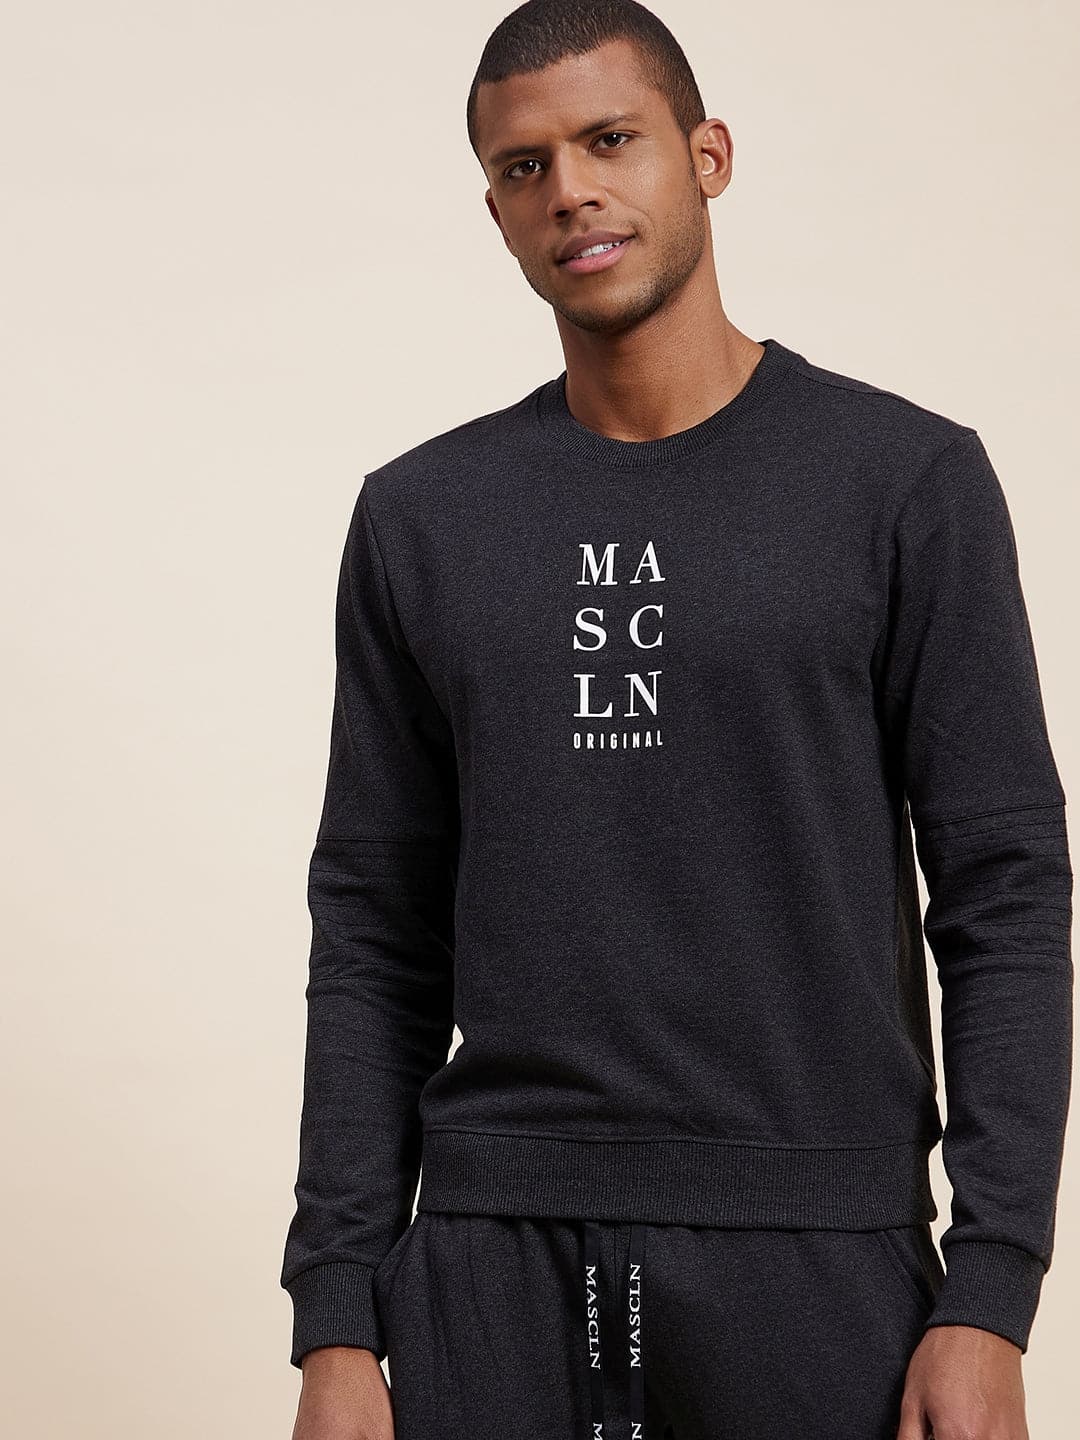 Men's Dark Grey Vertical MASCLN Print Sweatshirt - LYUSH-MASCLN